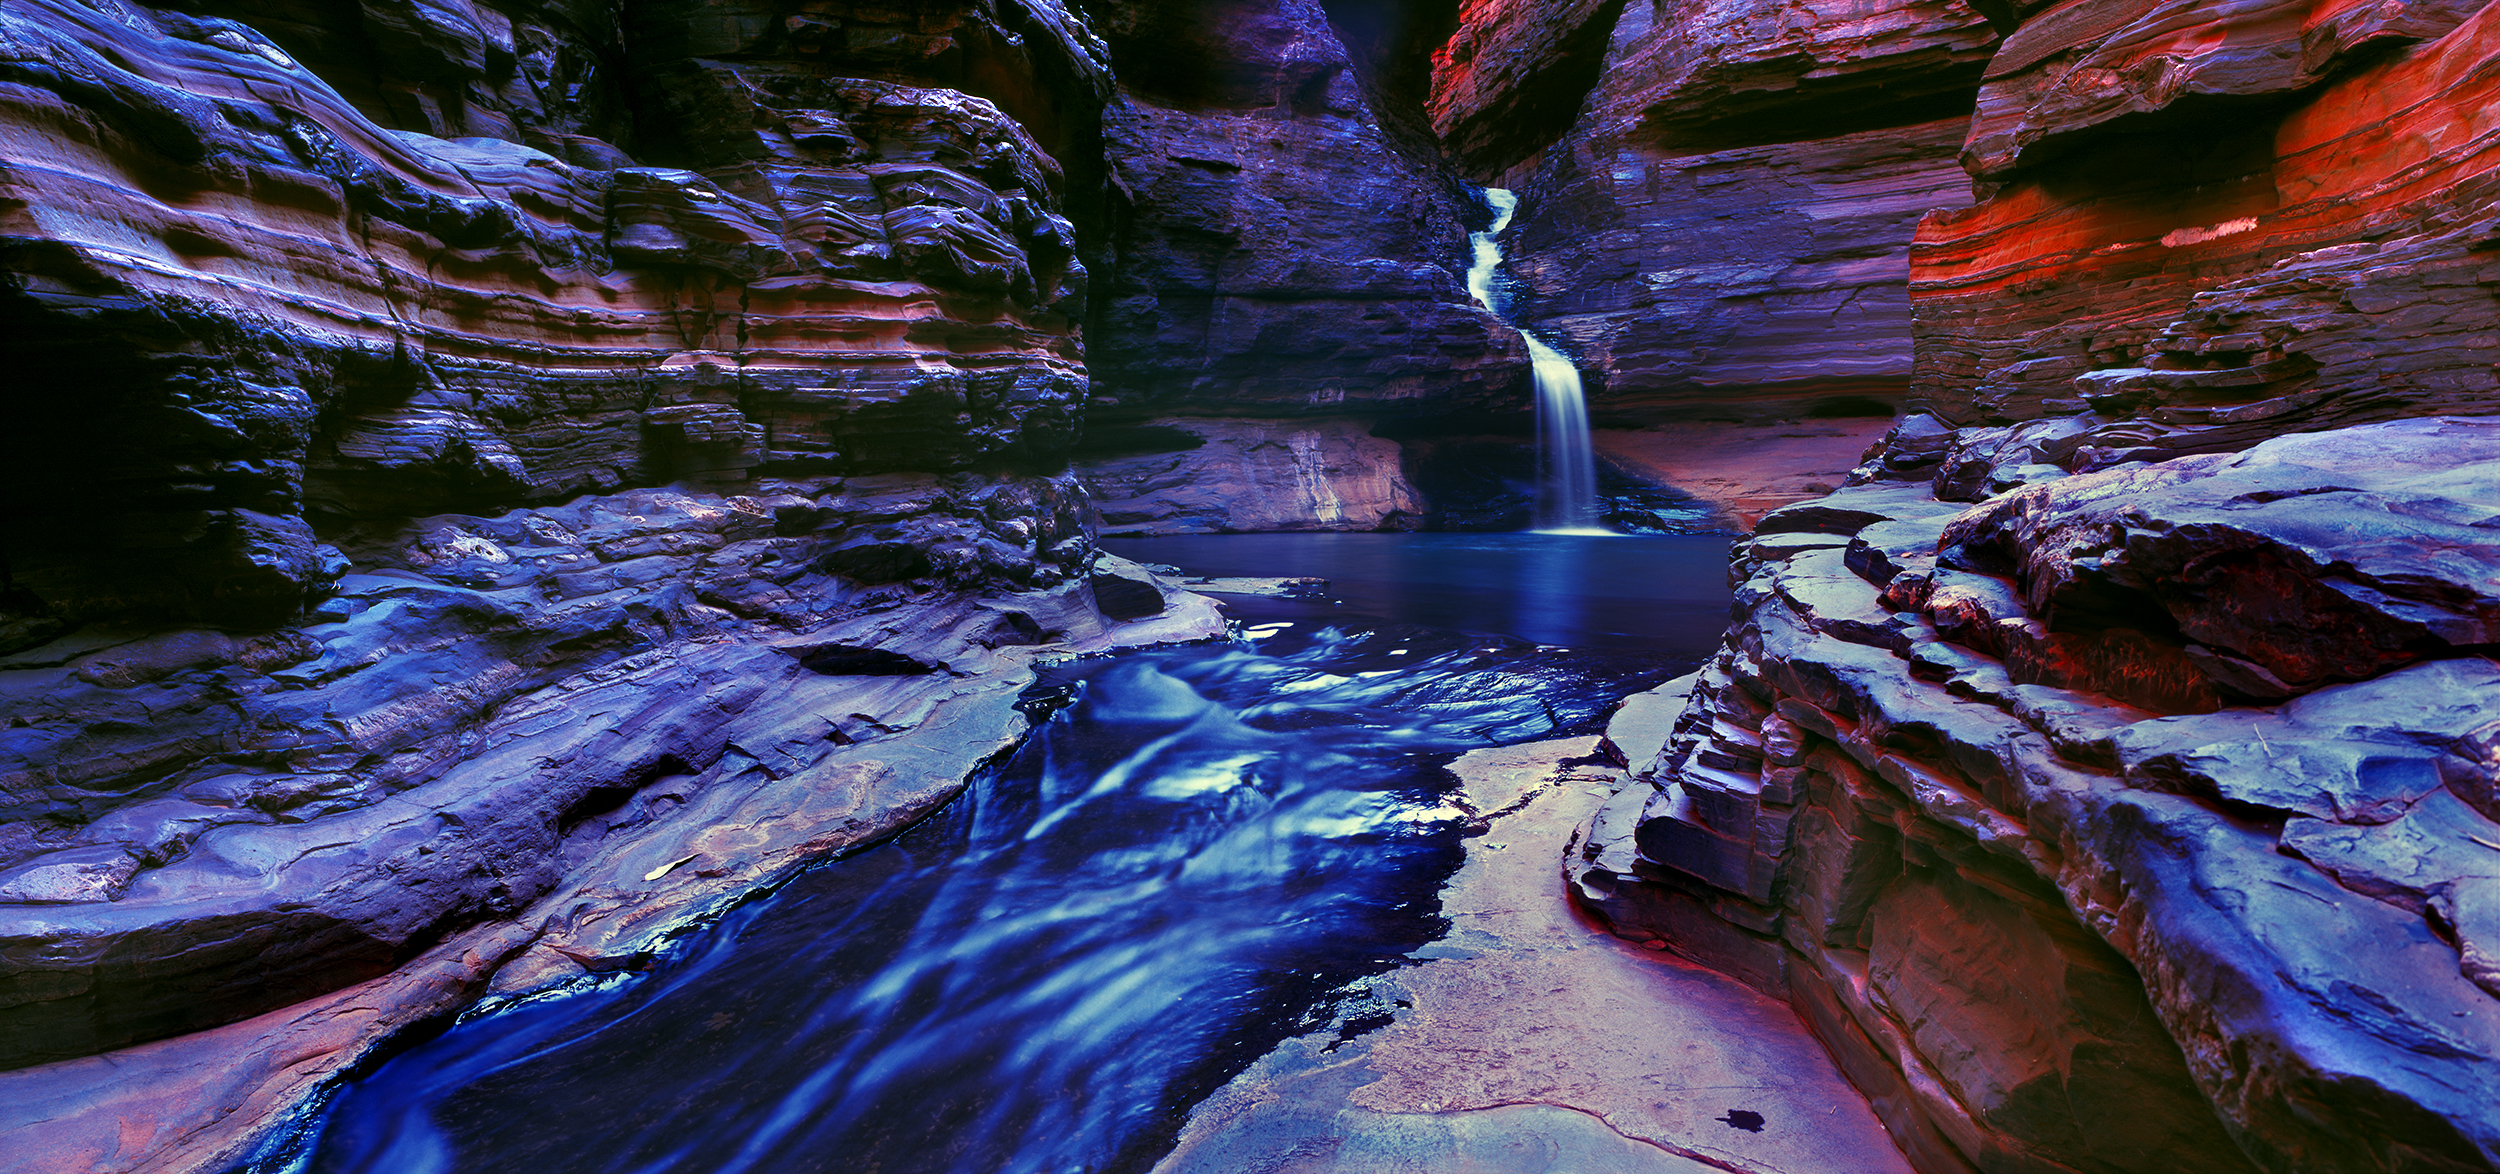  Regan's Pool, Karijini National Park, Hamersley Range, Western Australia, 2013.&nbsp; Edition of 3. 